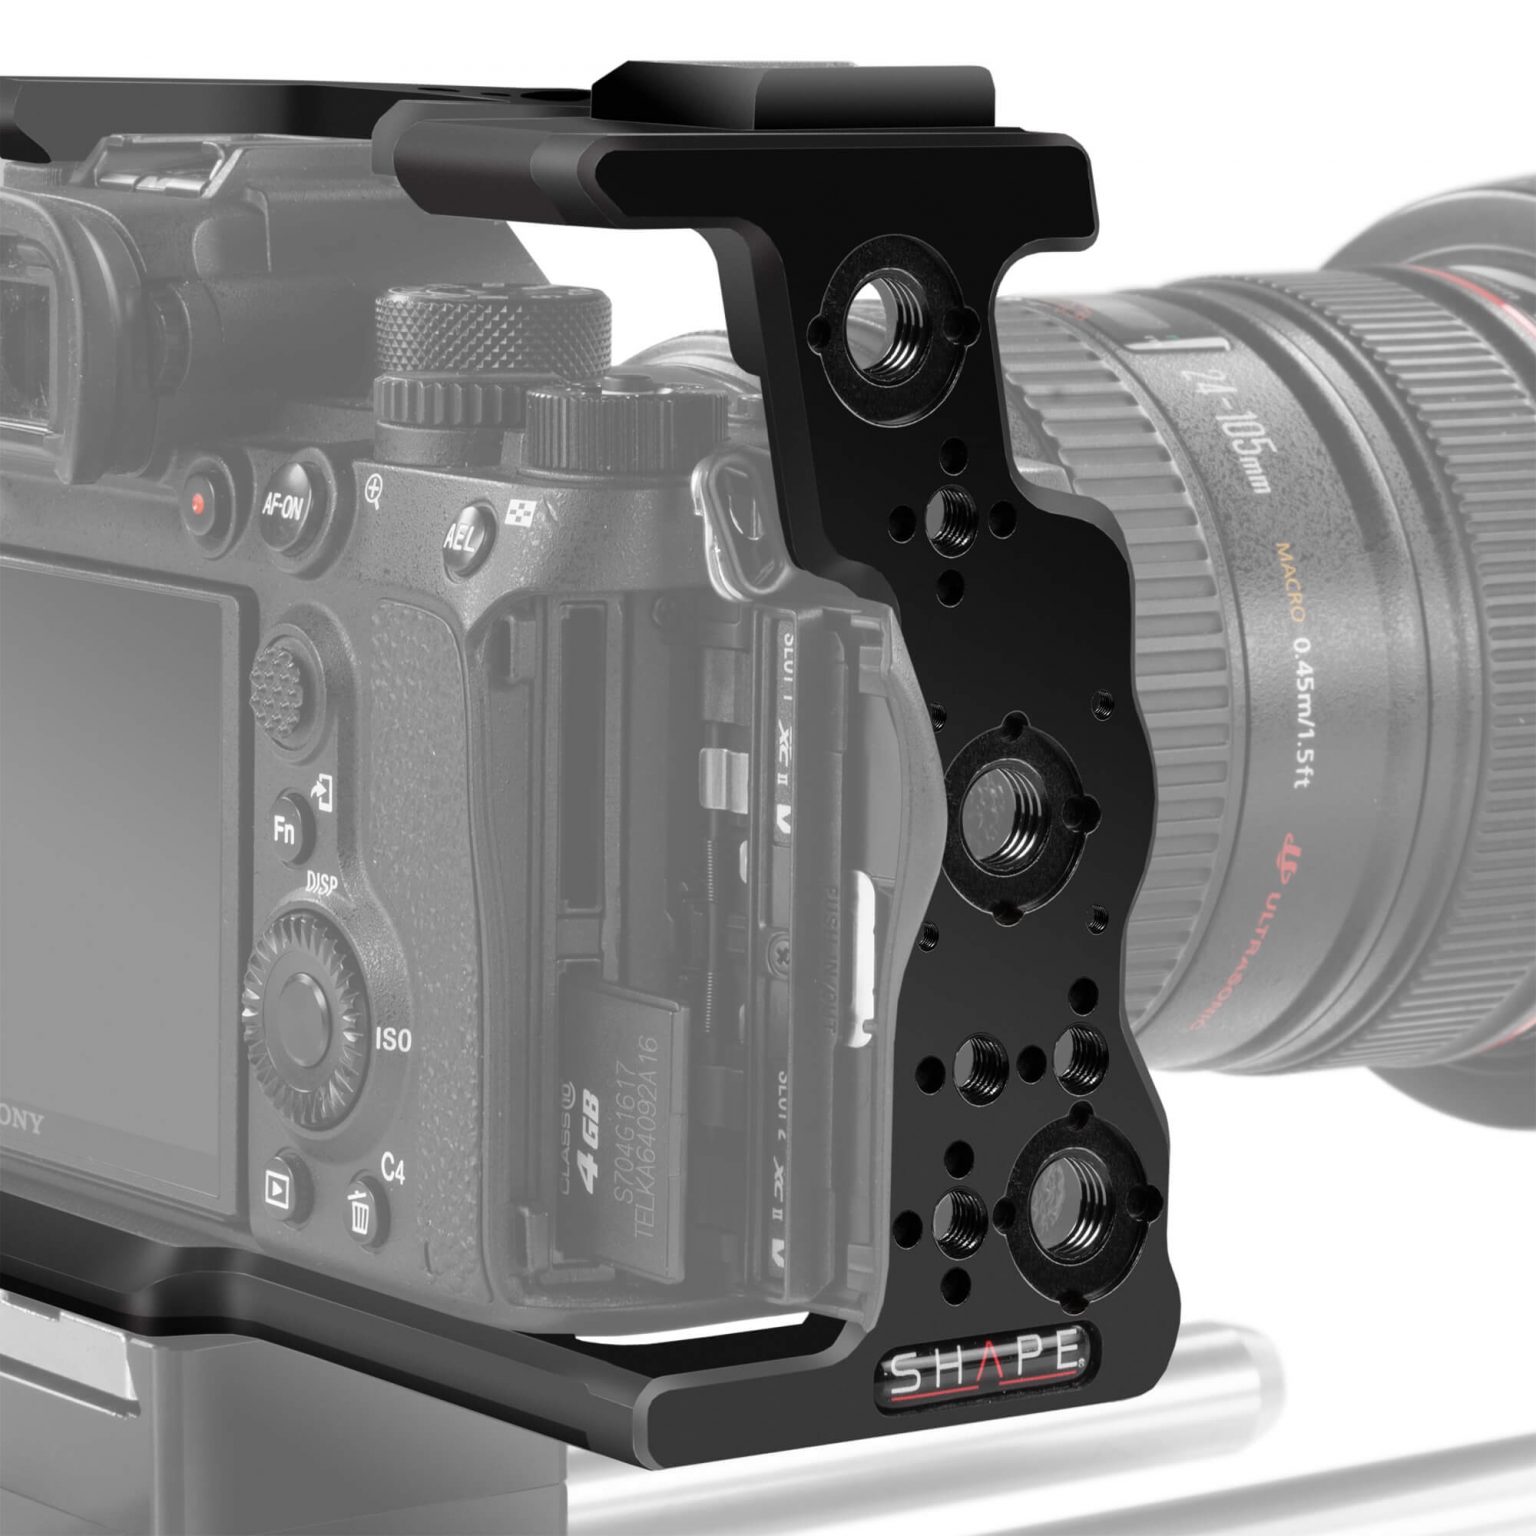 SHAPE Sony A7S3, A7 IV, A7R V kit with matte box and follow focus - SHAPE